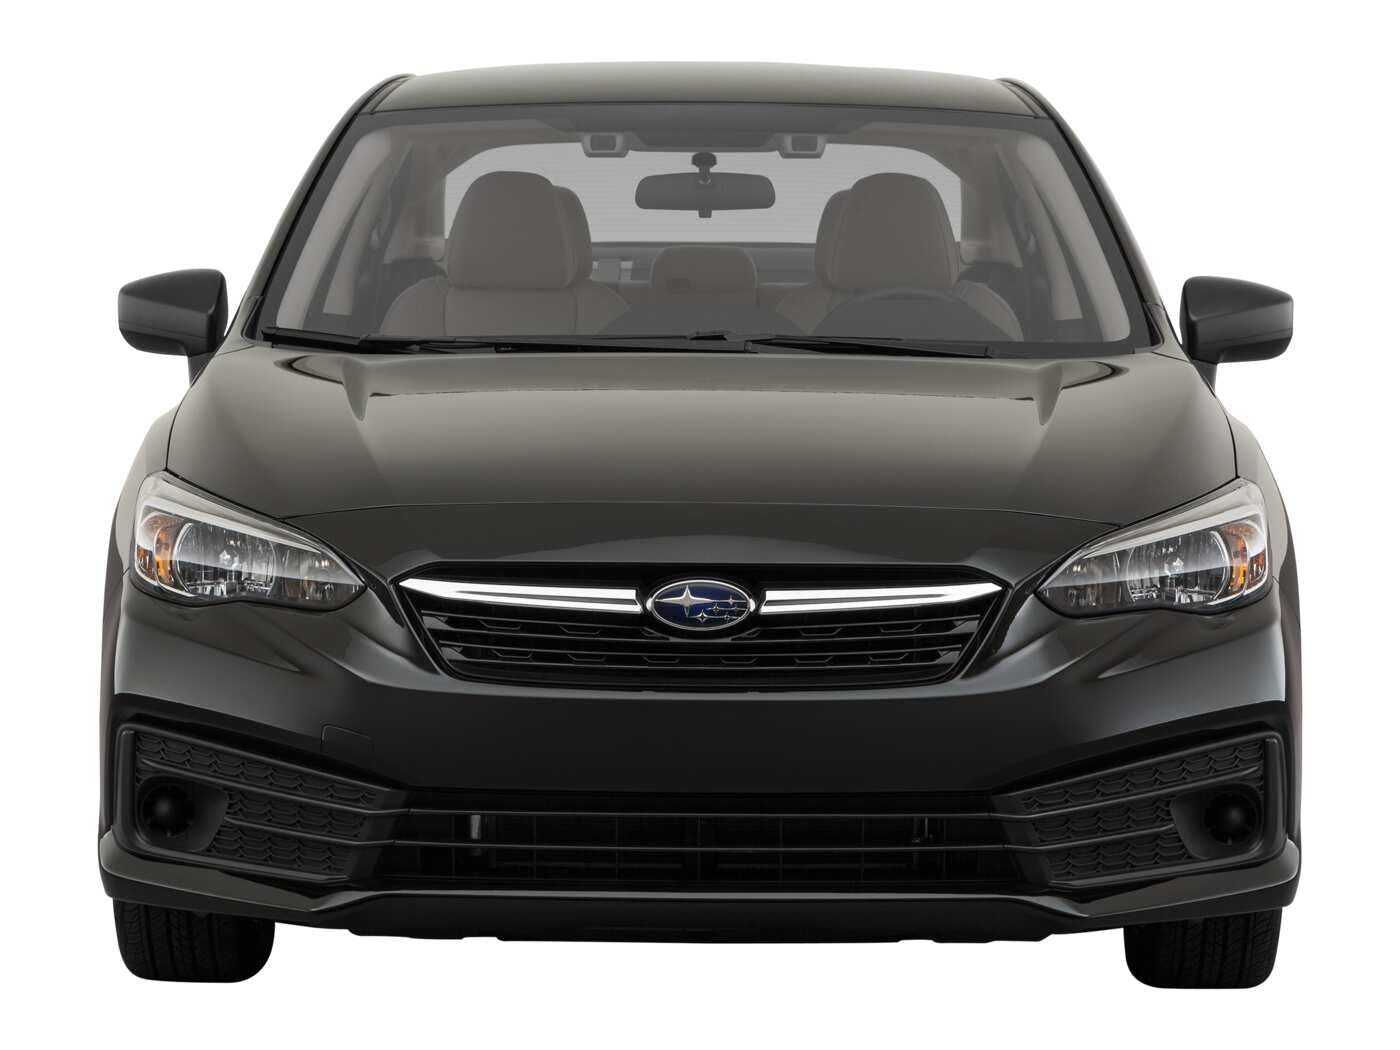 2020 Subaru Impreza Specs, Price, MPG & Reviews